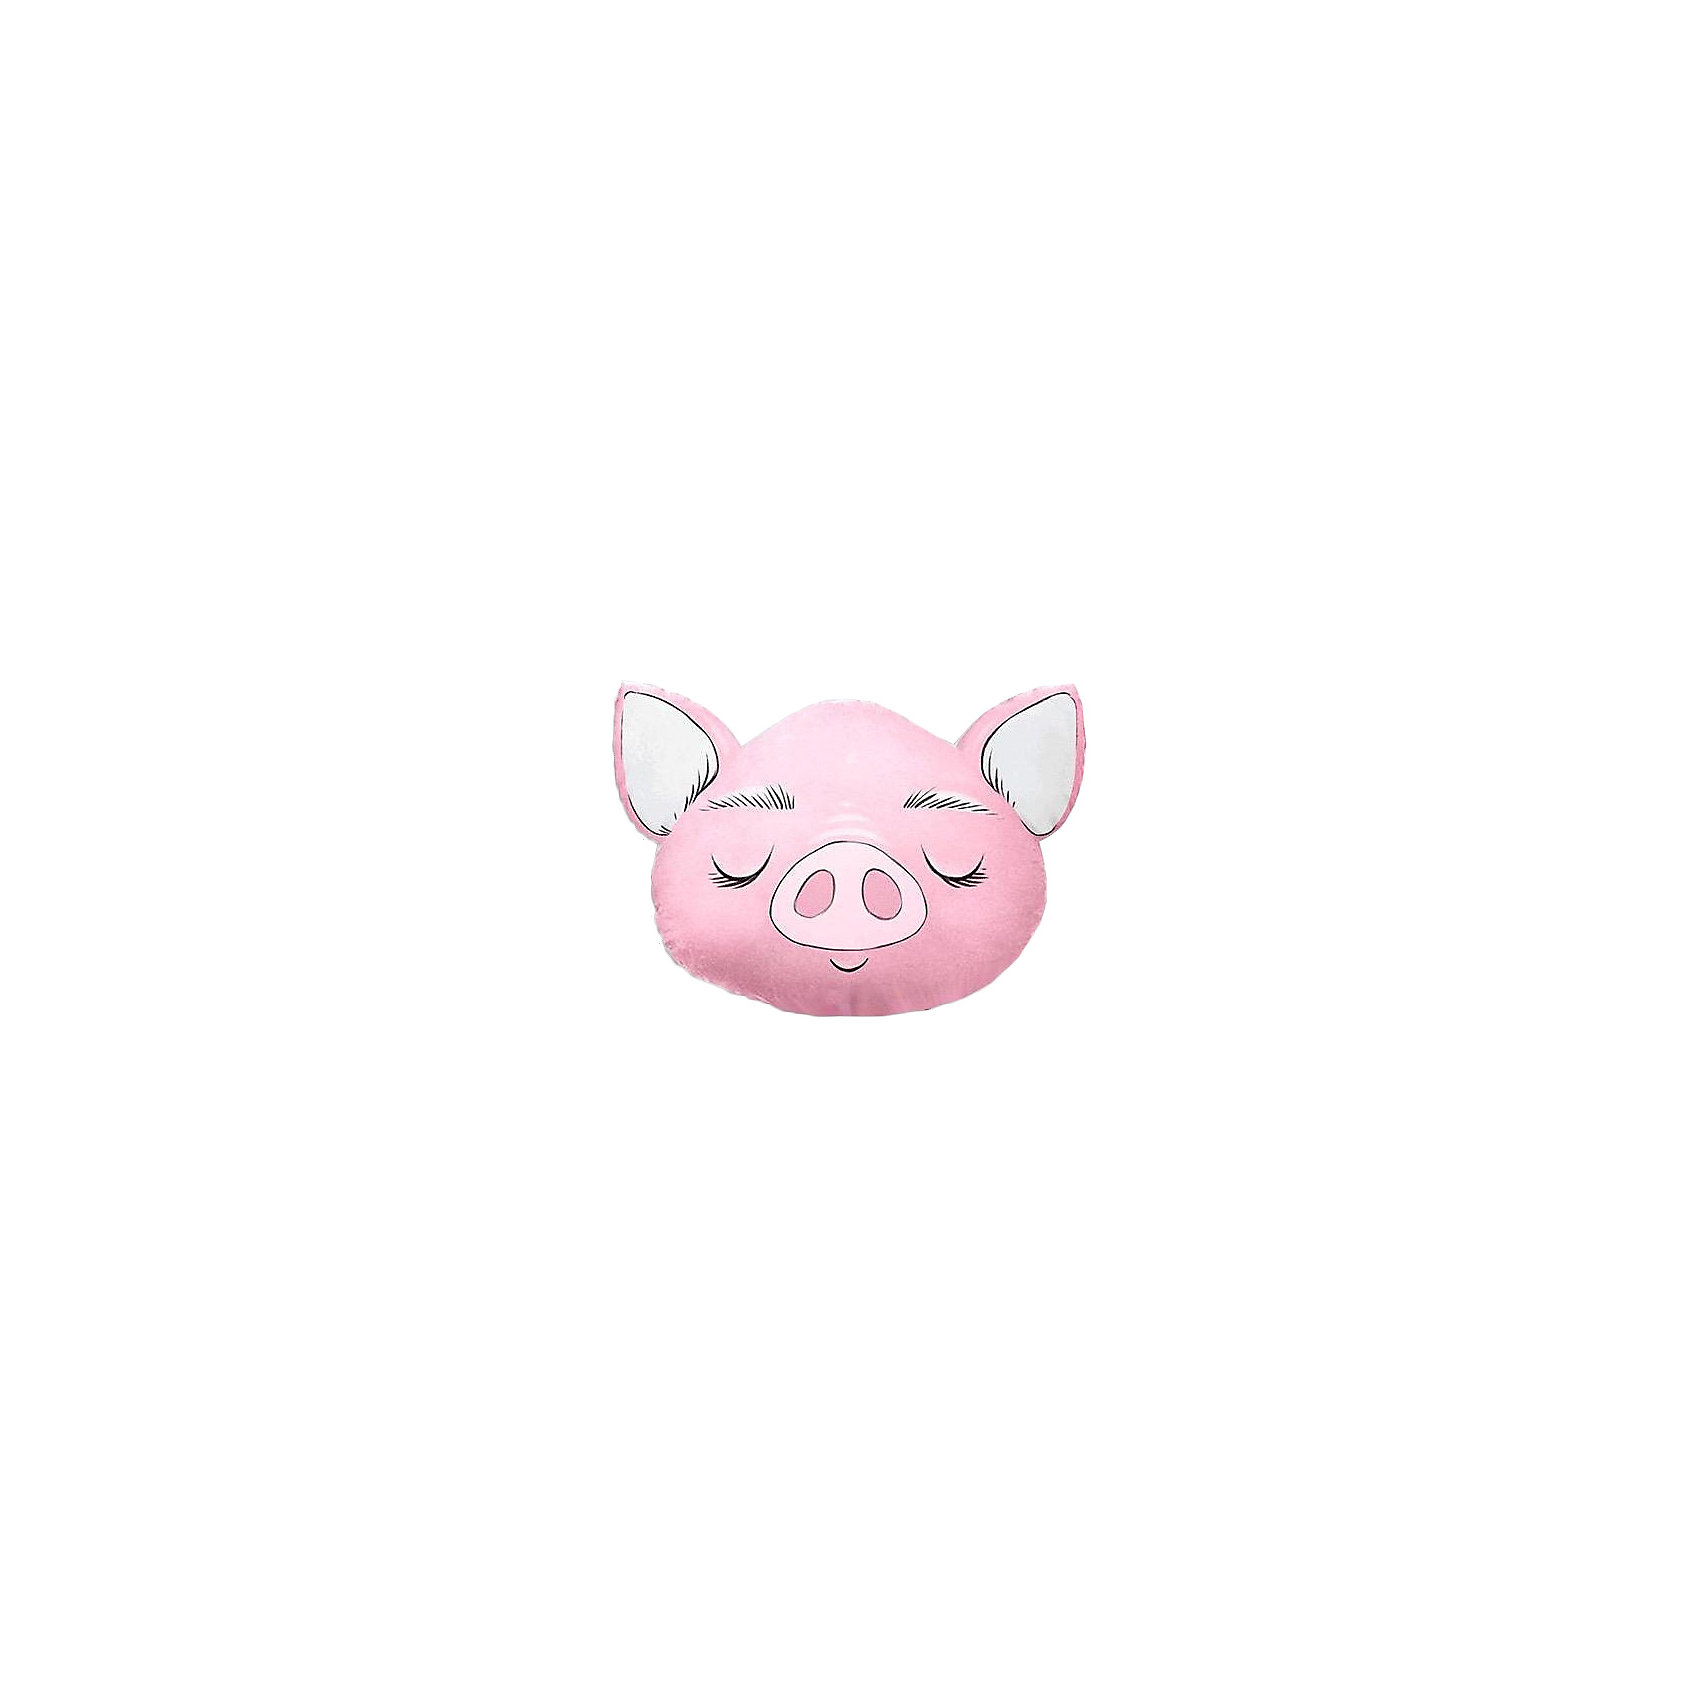 фото Подушка Ligra "Свинка" ручной работы, 50х55 см, розовая Ligrasweethome